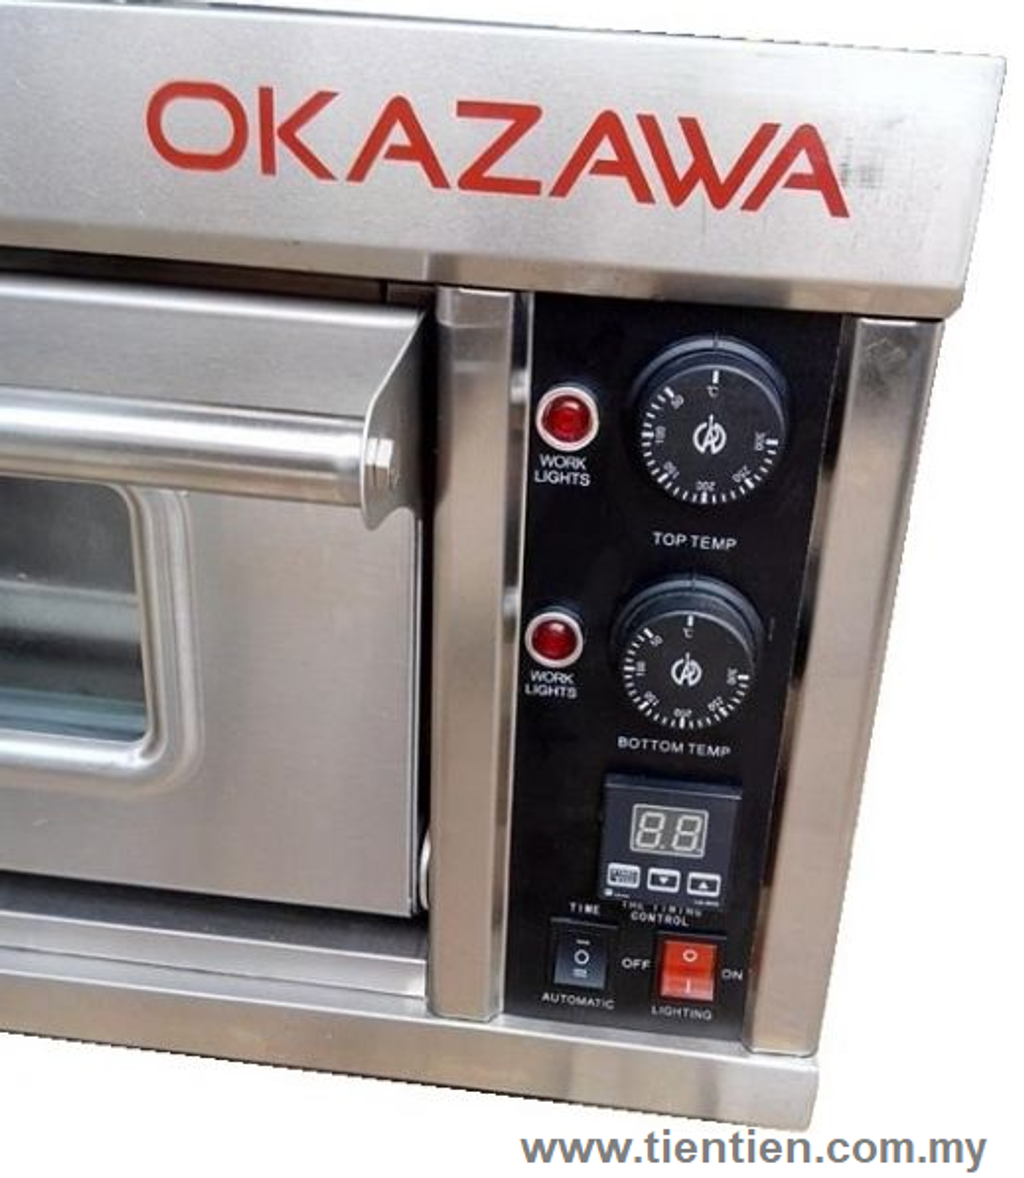 okz-industrial-stanless-steel-electronic-oven-1-deck-evl11m-c-tientien-malaysia.png